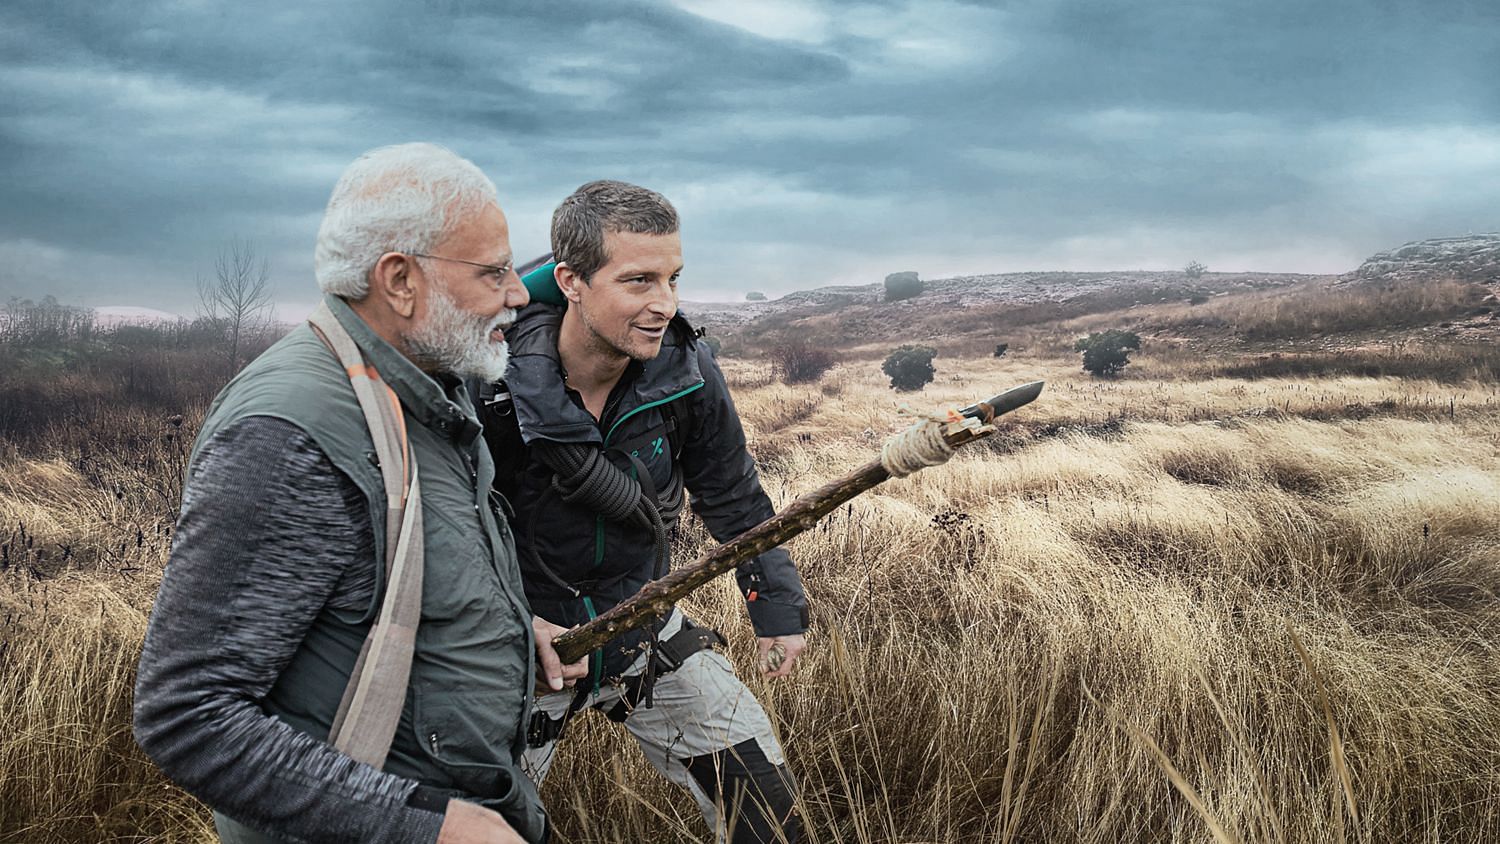 PM Modi and host of ‘Man vs Wild’ Bear Grylls.